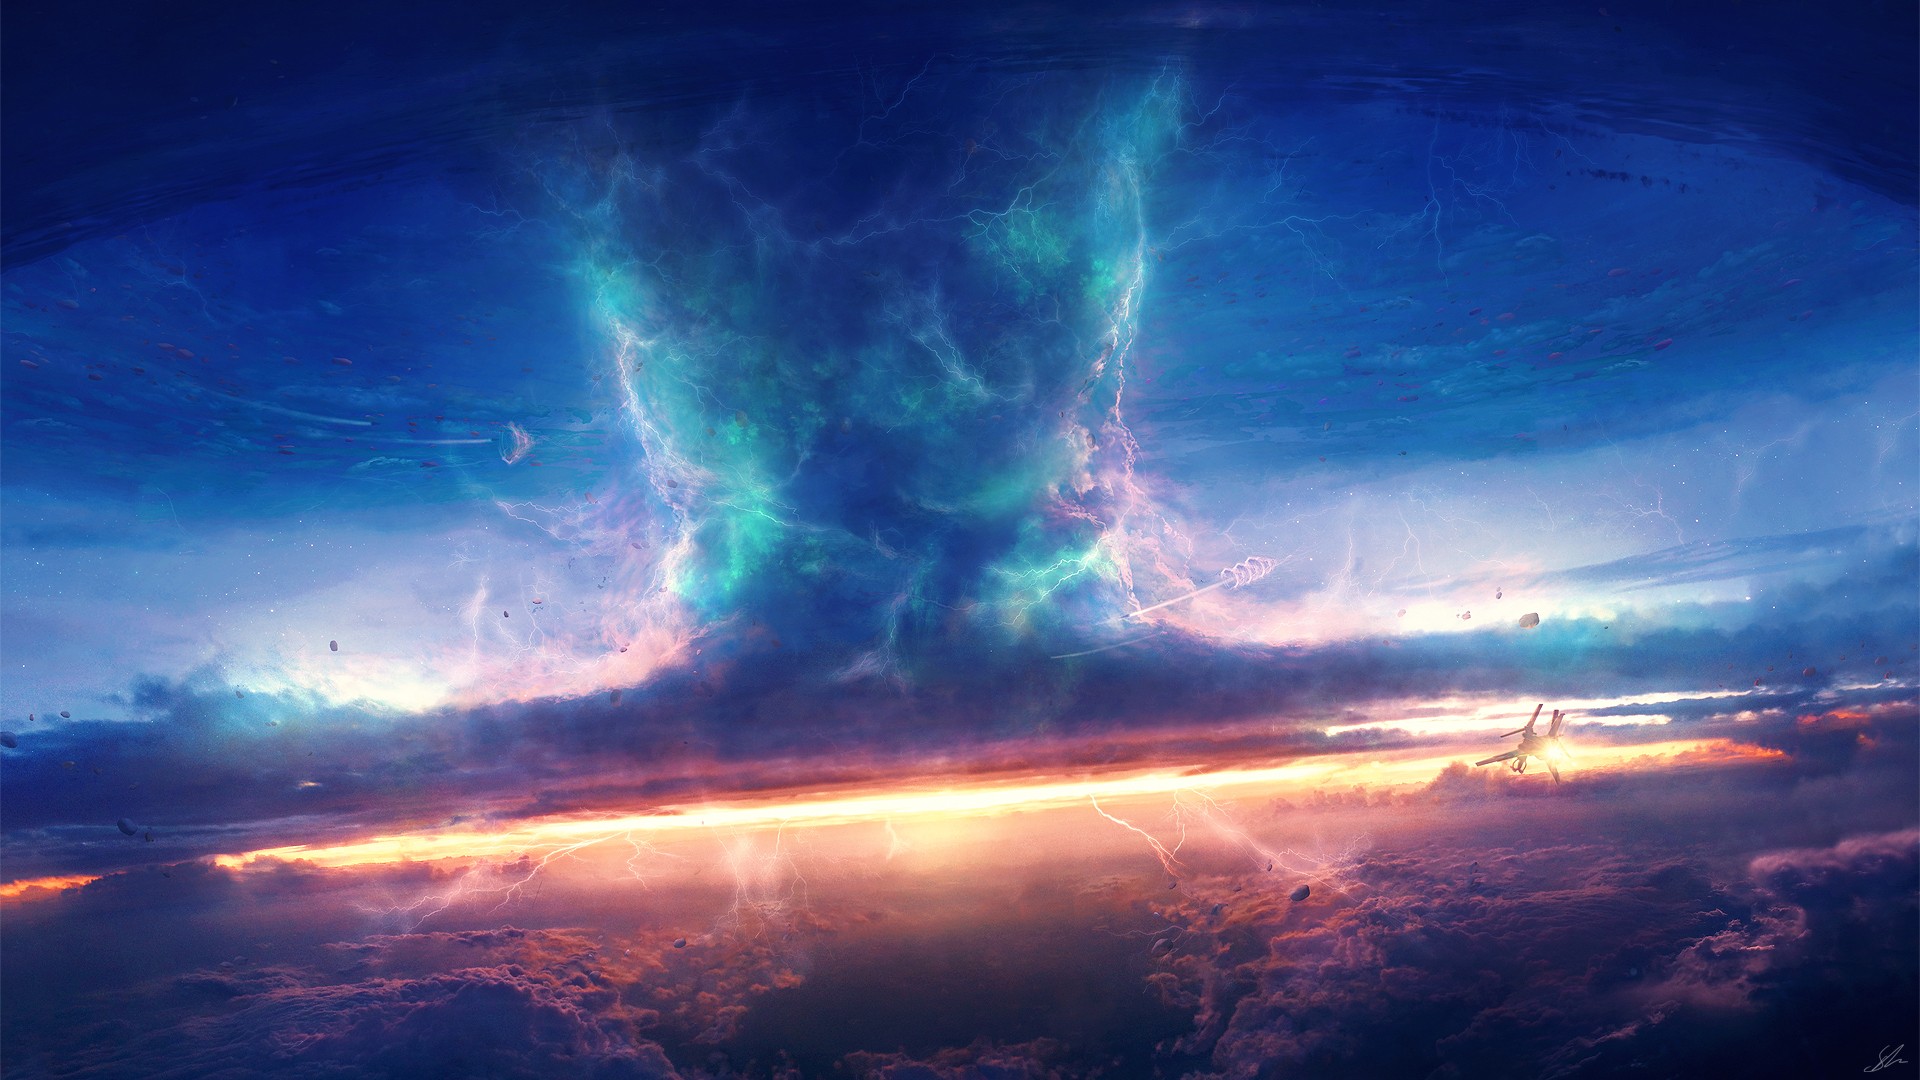 General 1920x1080 tornado sky DeviantArt digital art artwork storm clouds lightning